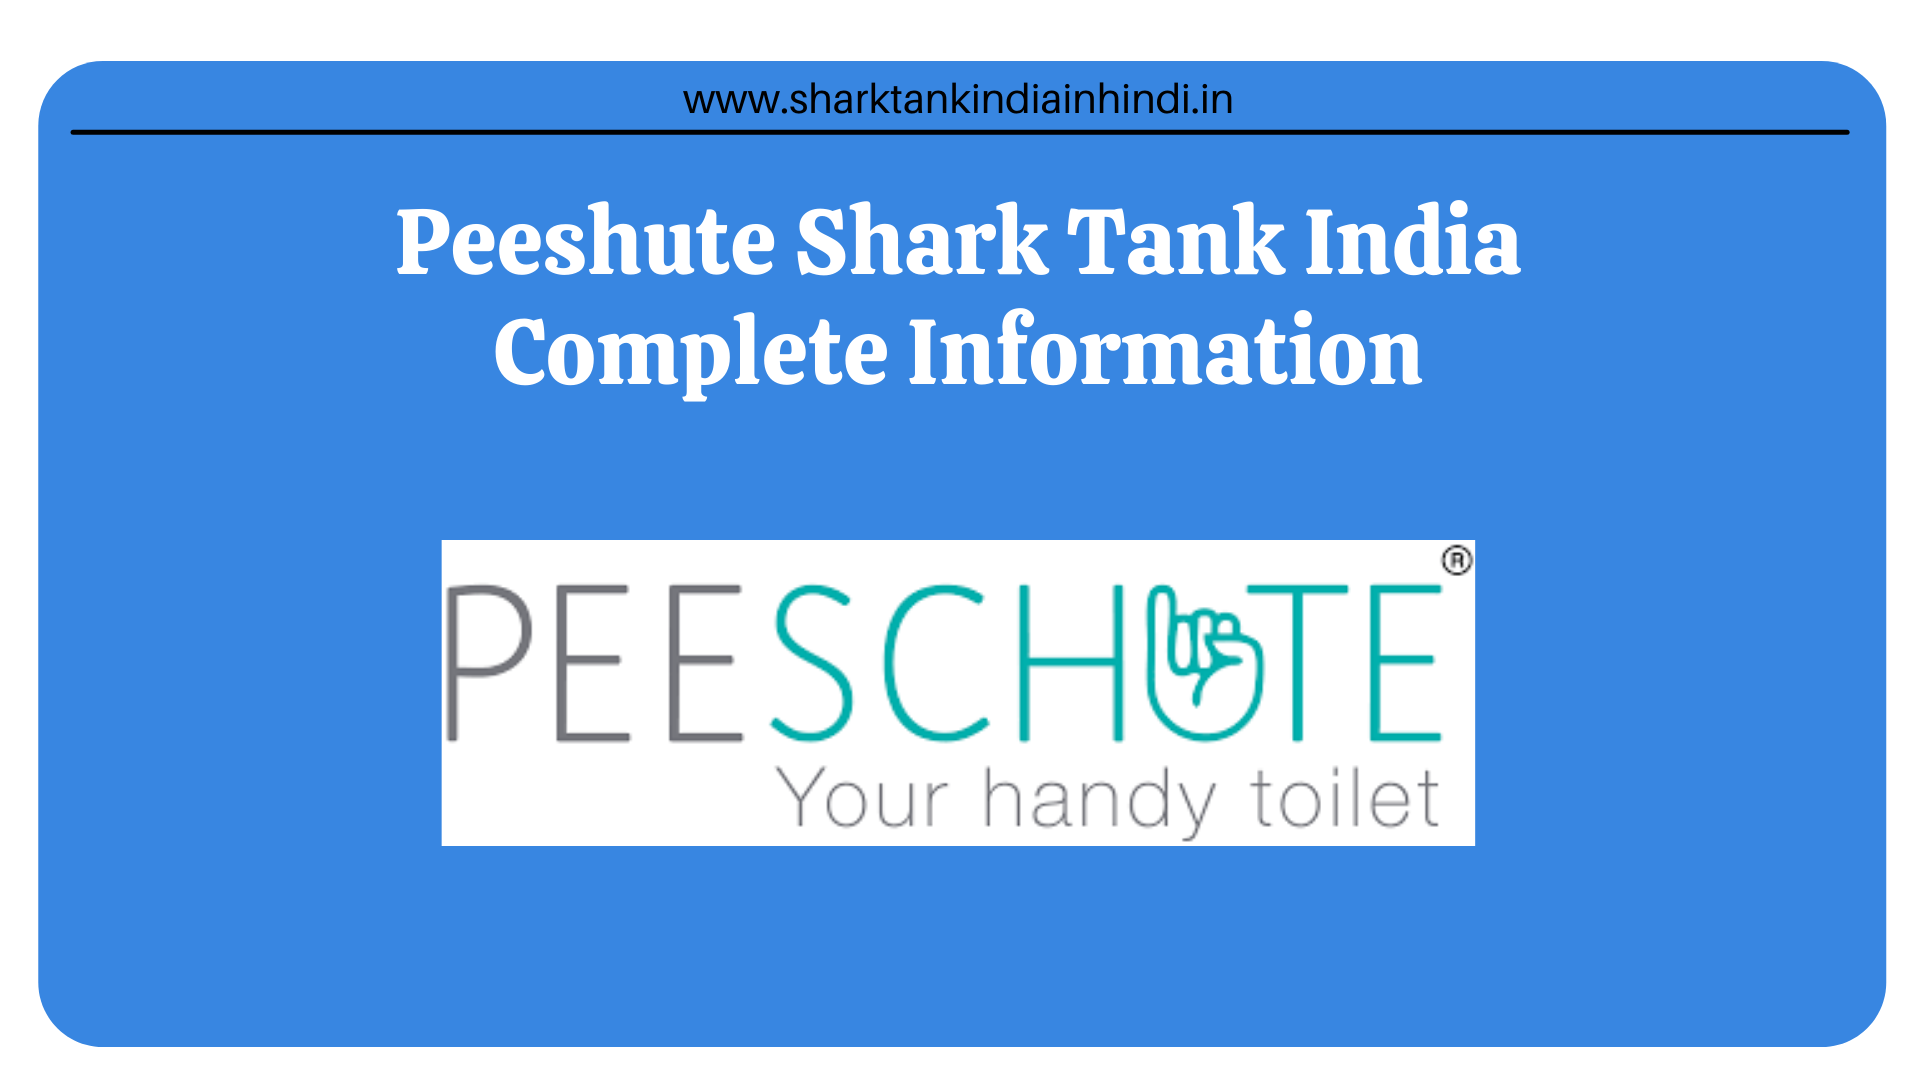 Peeschute Shark Tank India Complete Information